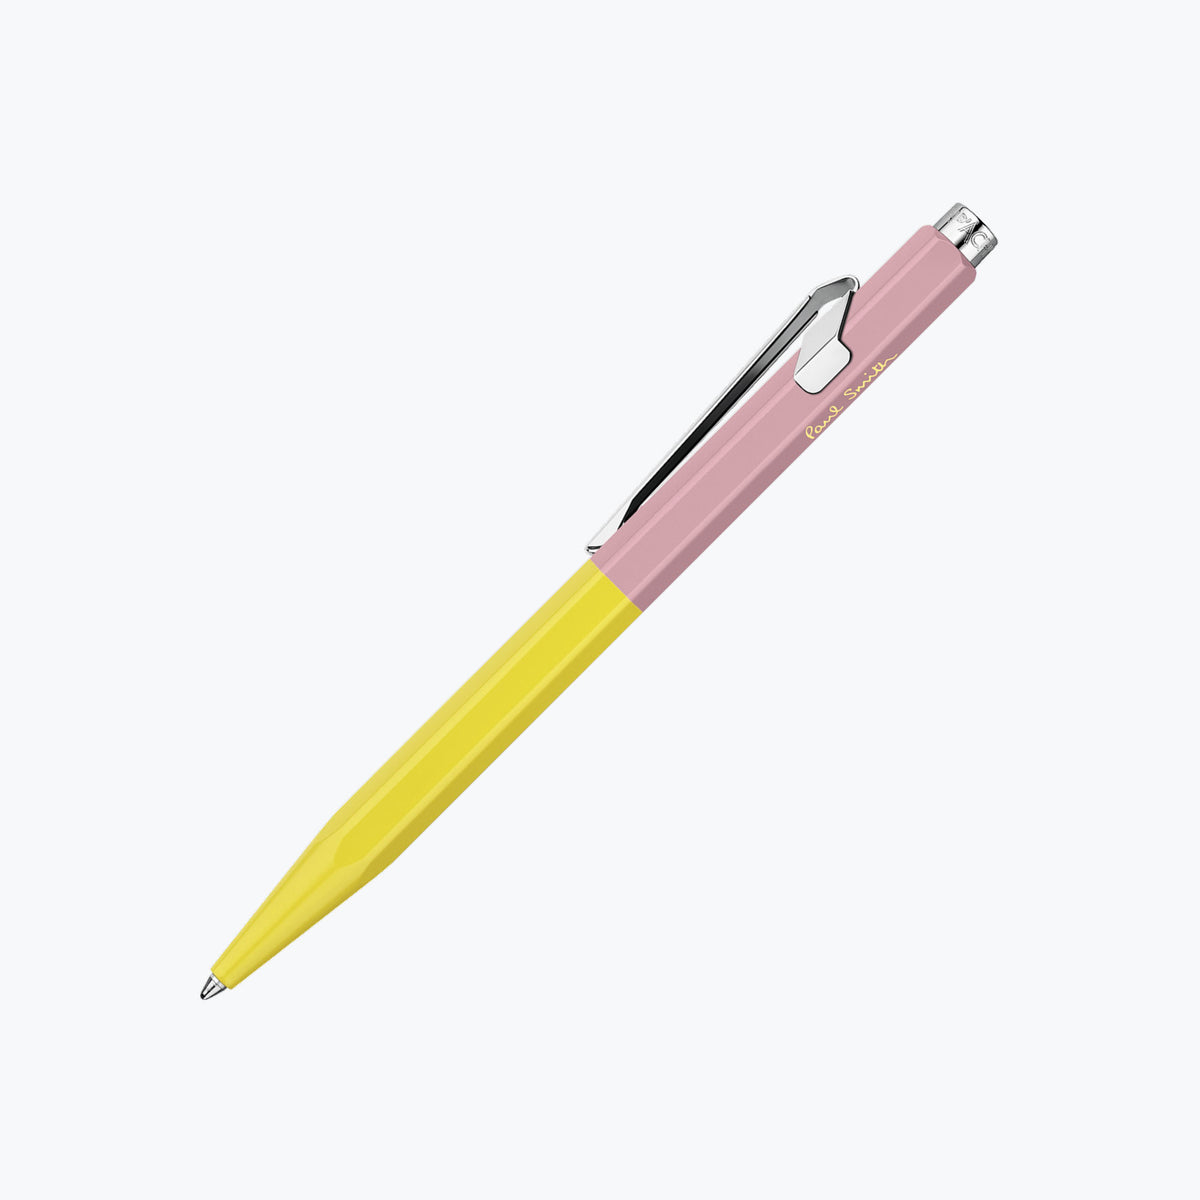 Caran d'Ache - Ballpoint Pen - 849 Paul Smith 4 - Chartreuse Yellow & Rose Pink